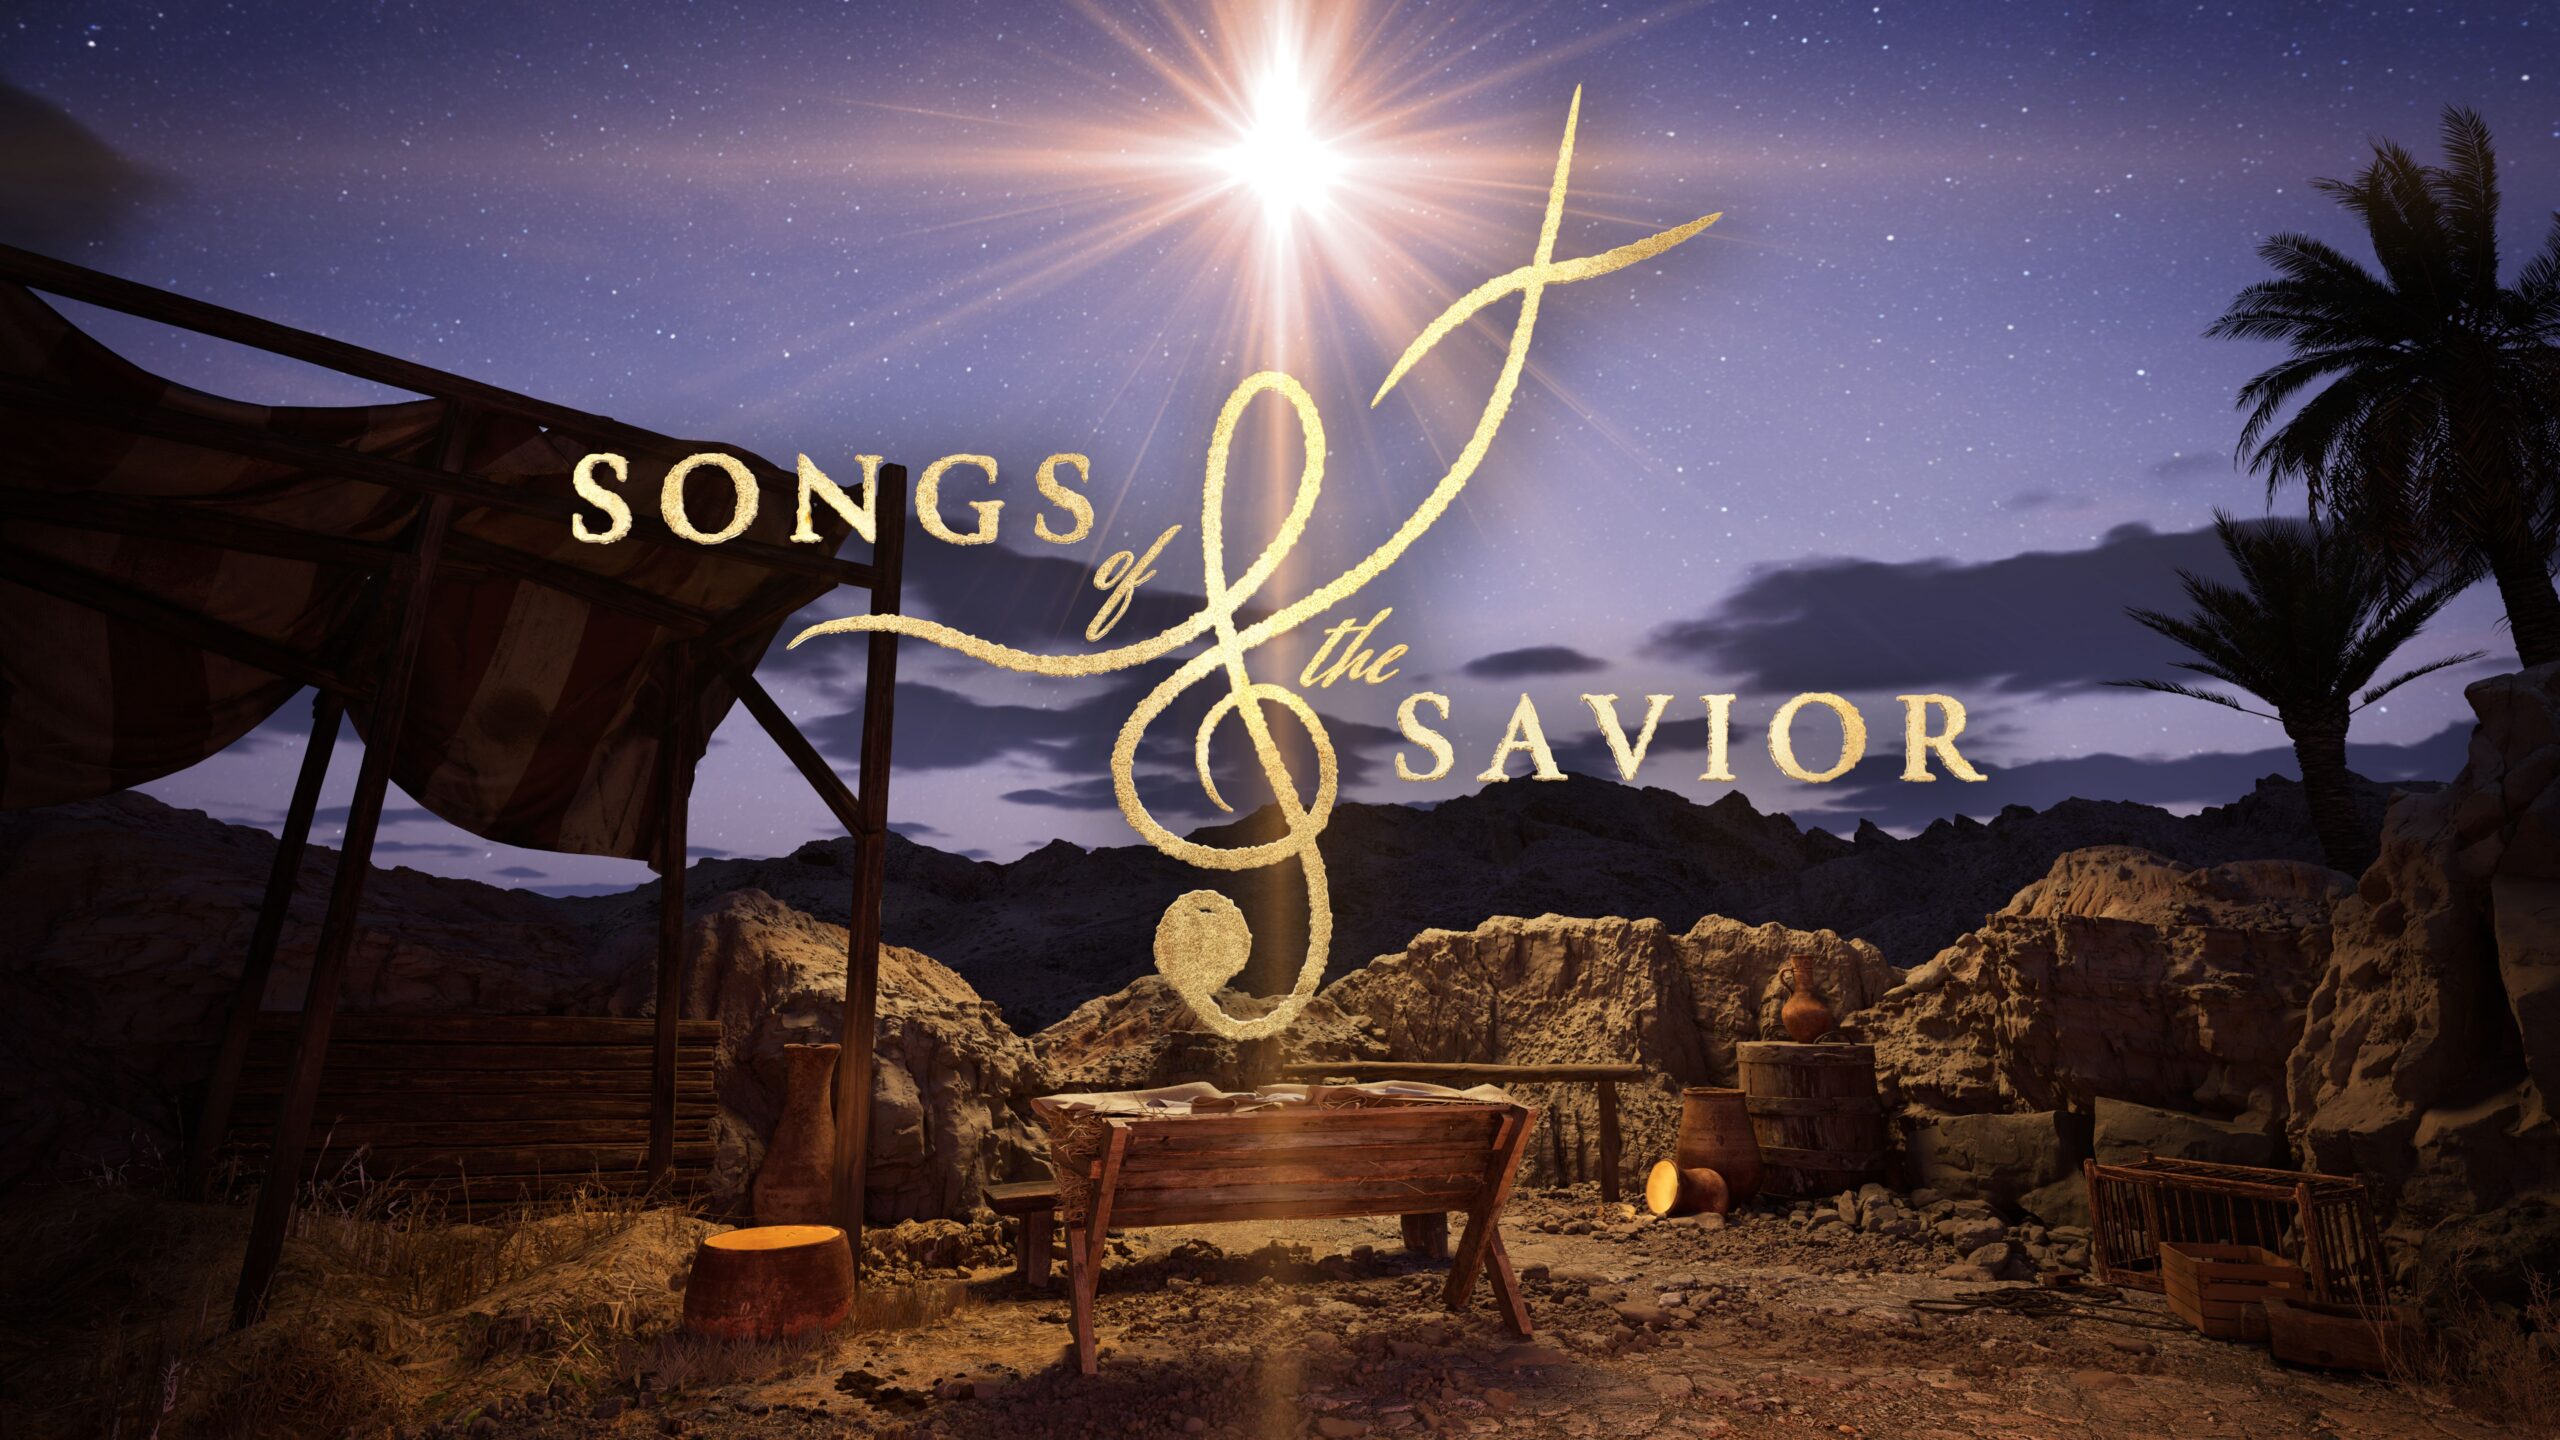 Songs of the Savior: “Joy to the World”